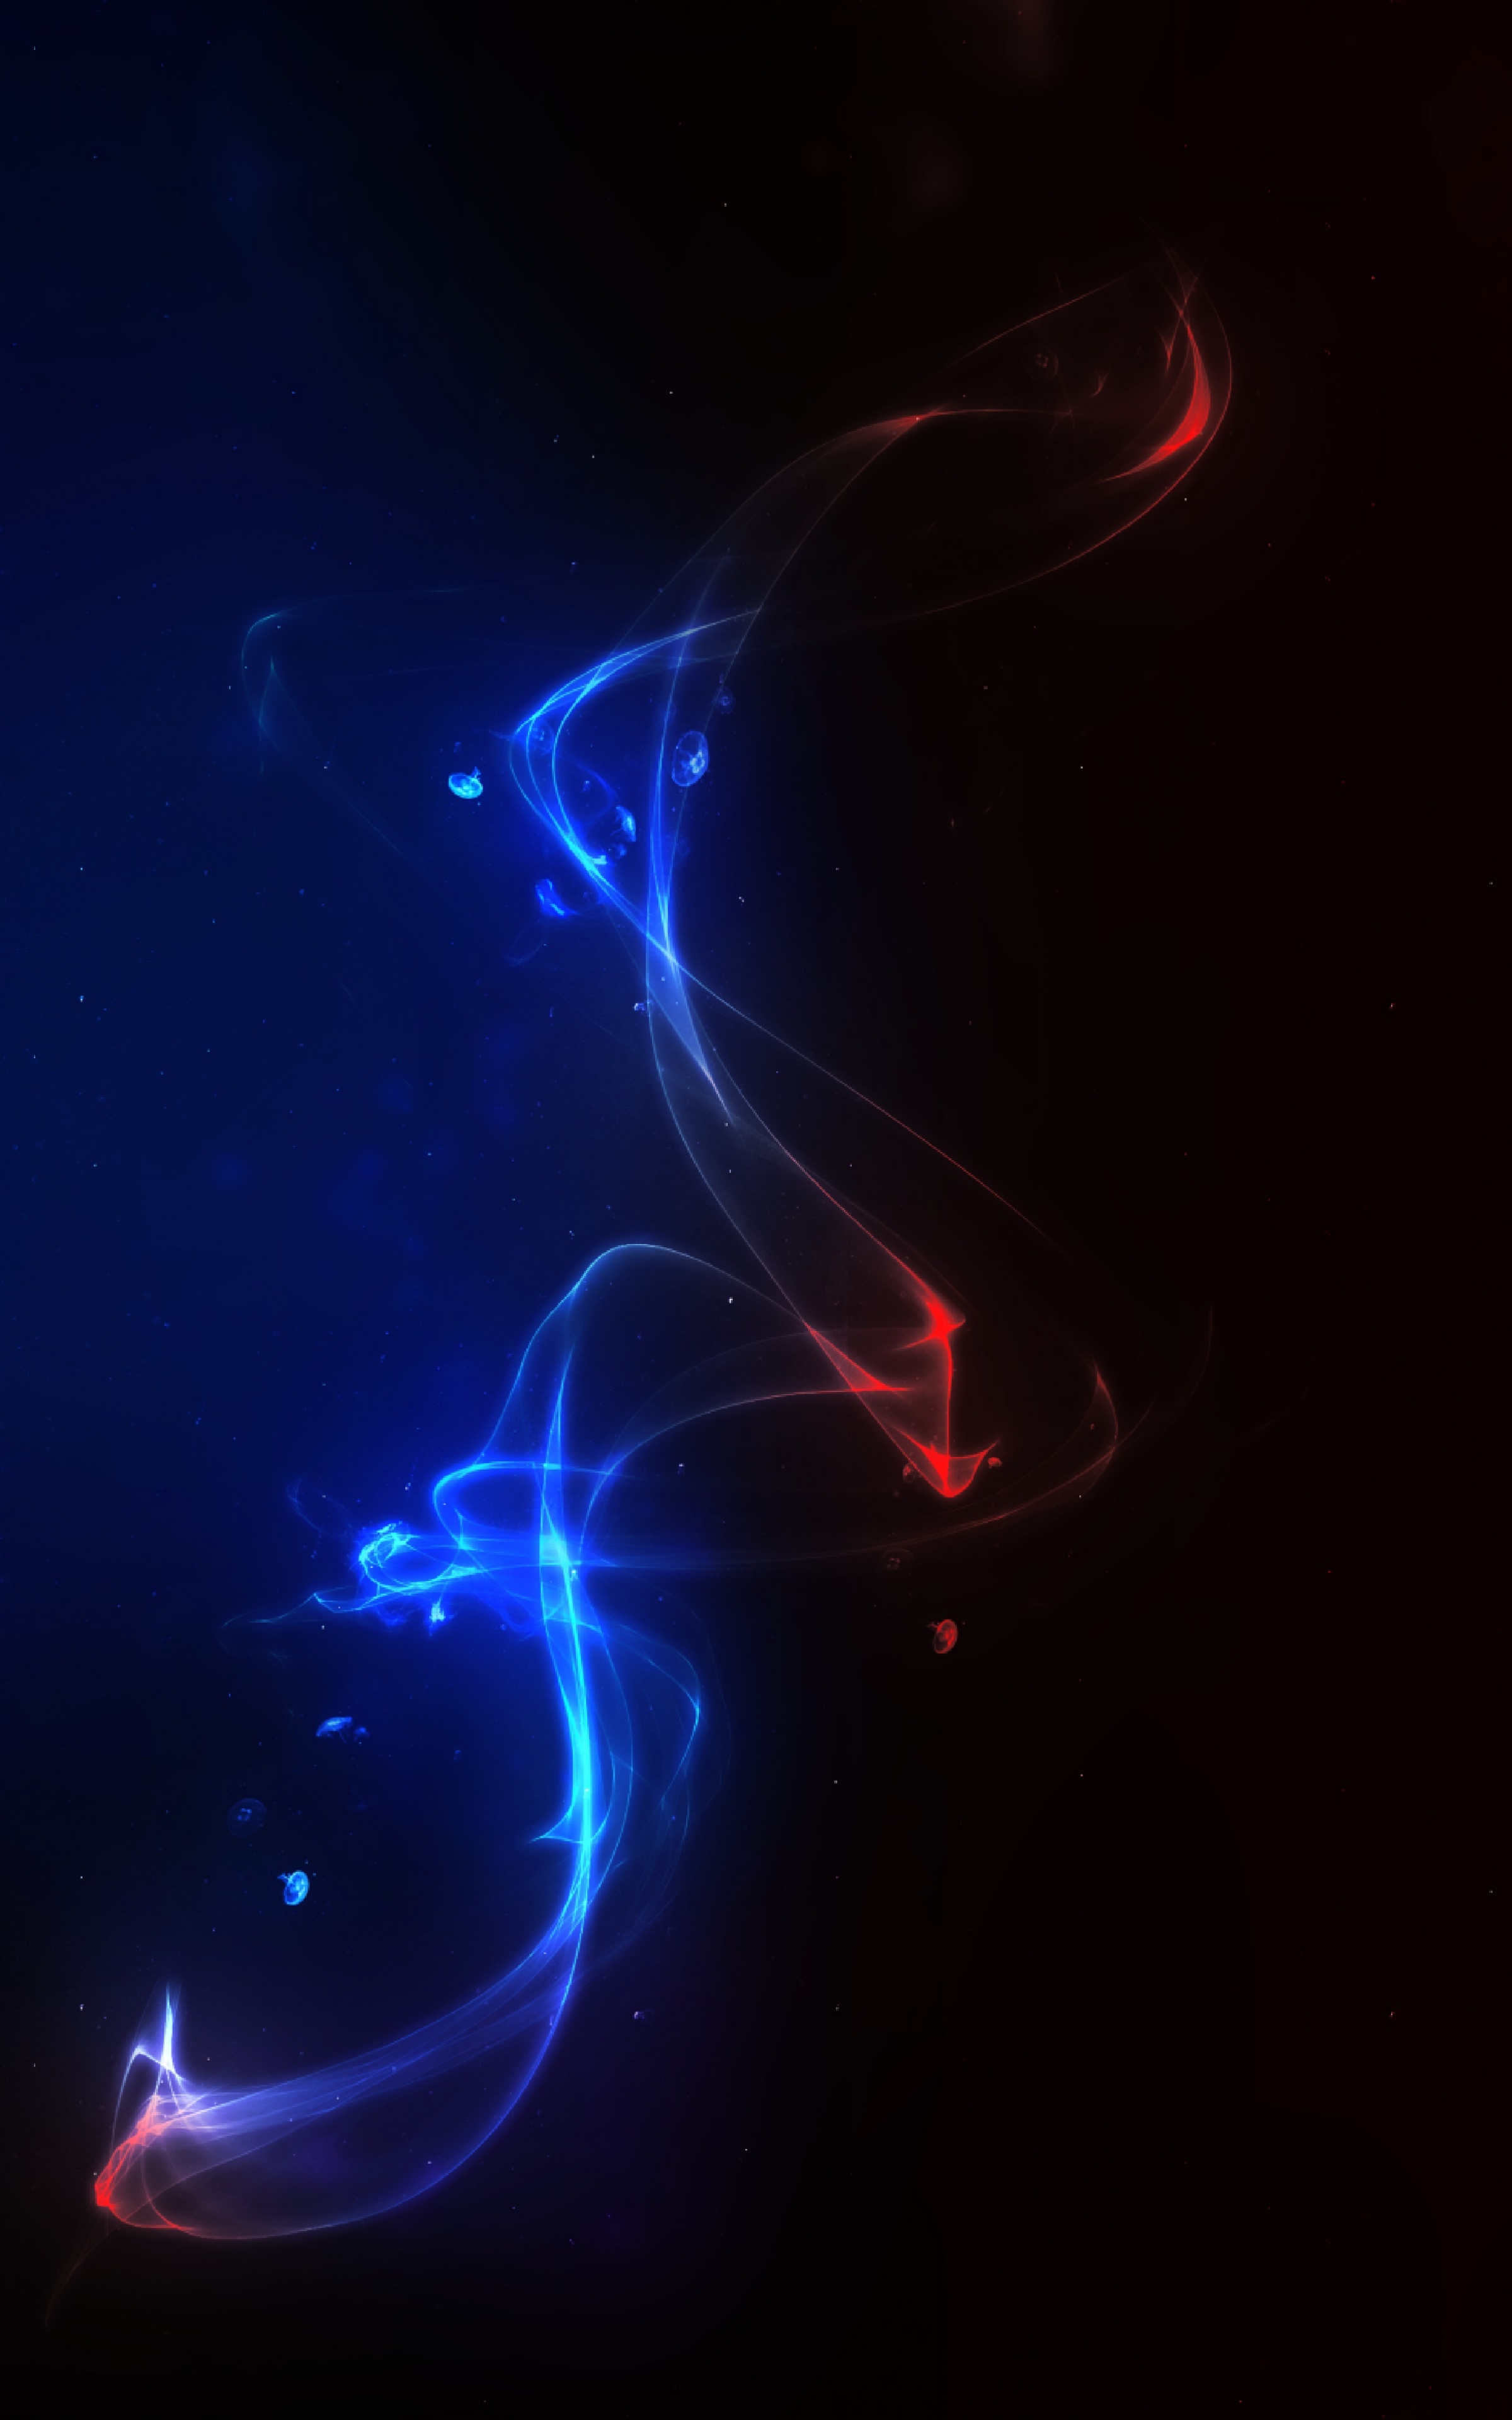 glow, energy, abstract, blue, red Desktop home screen Wallpaper